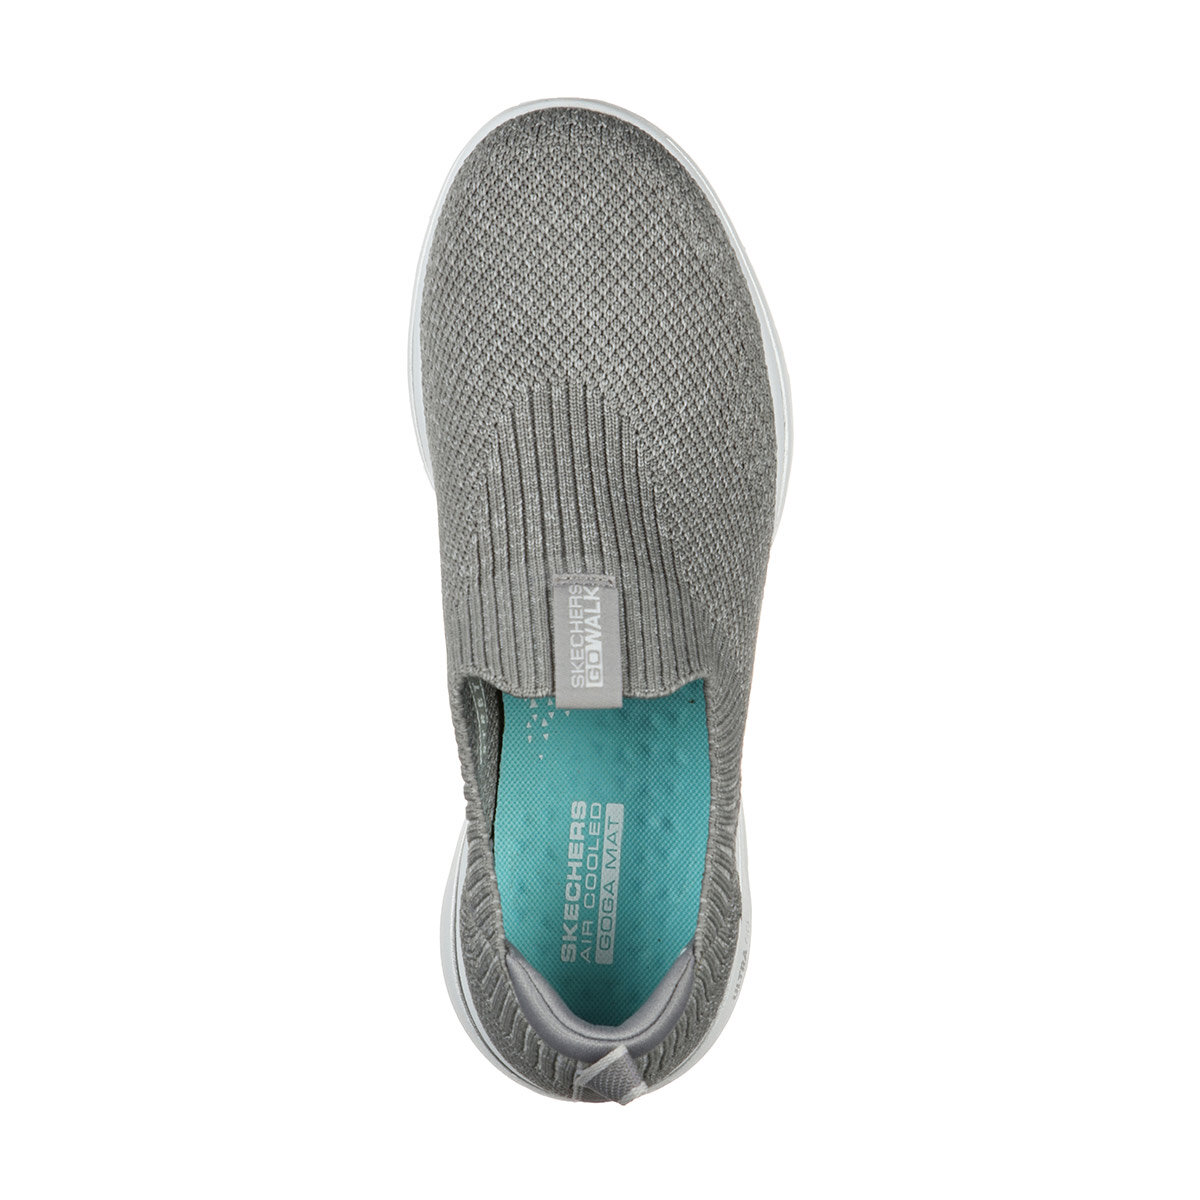 Top image of grey shoe